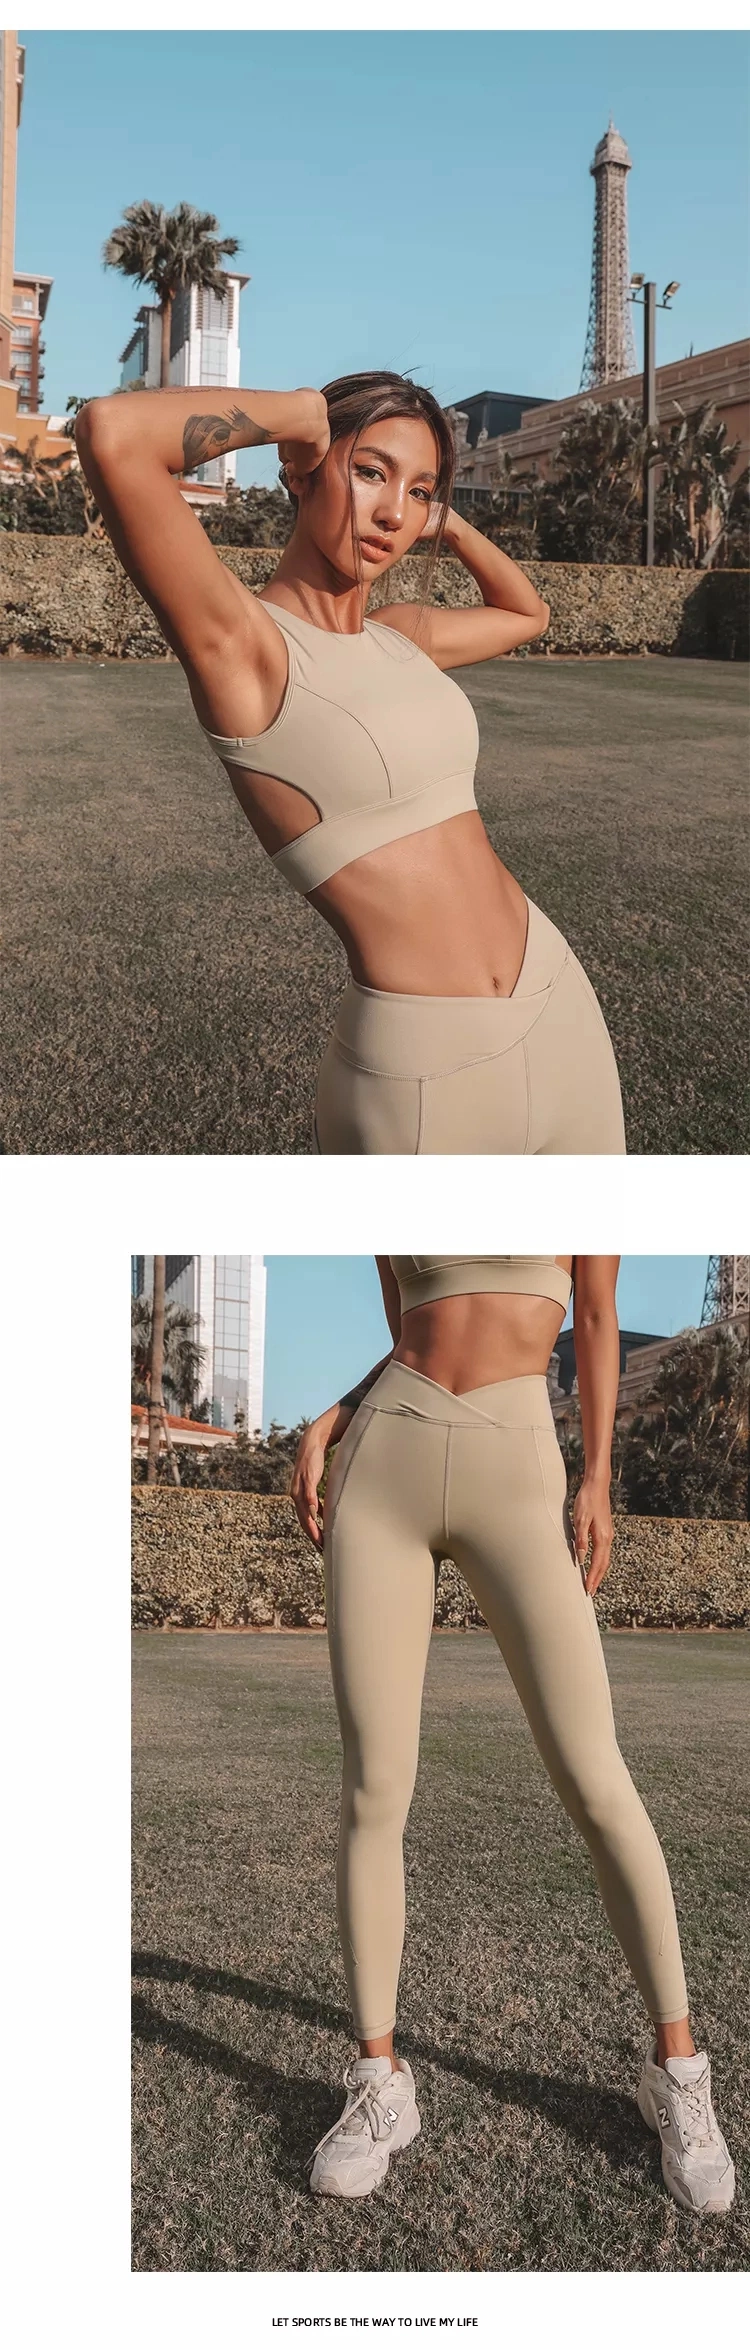 Original Designs Sporstwear Women′s Yoga Fitness Gym Set Breathable Squat Proof Yoga Wear Leggings